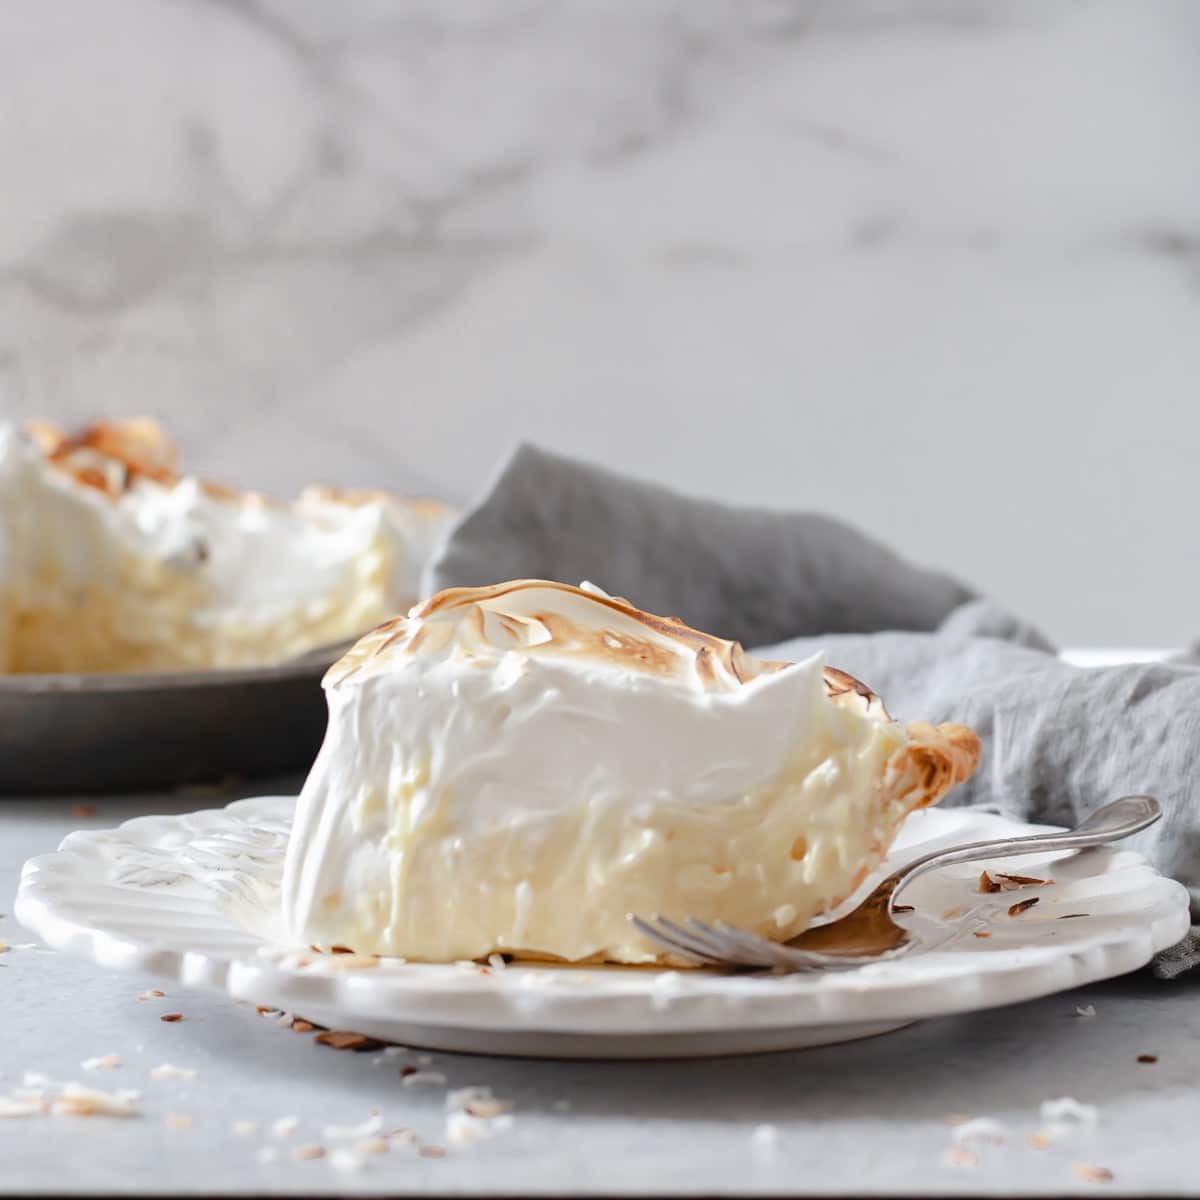 slice of old fashioned coconut cream pie with meringue